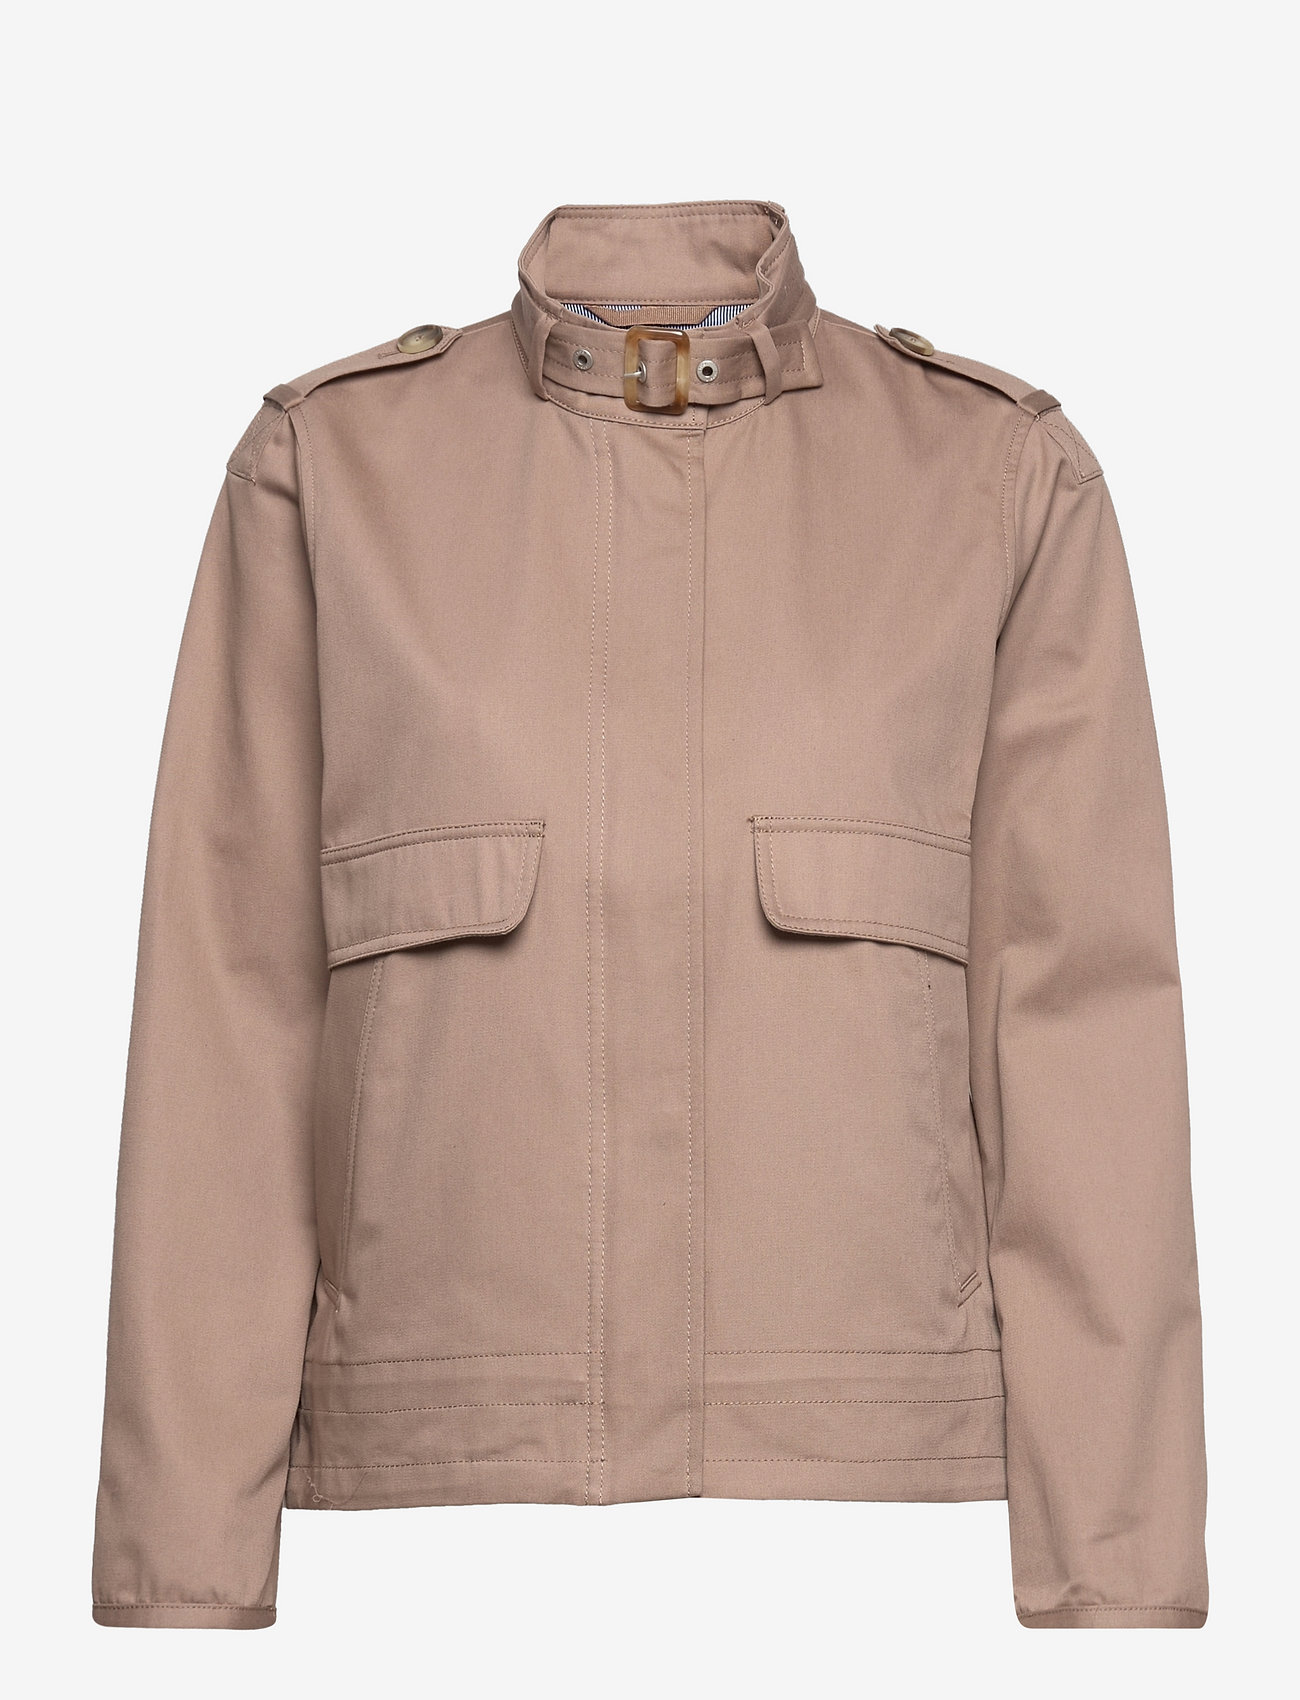 Esprit Casual - Outdoor jacket - utility-jakker - taupe - 0